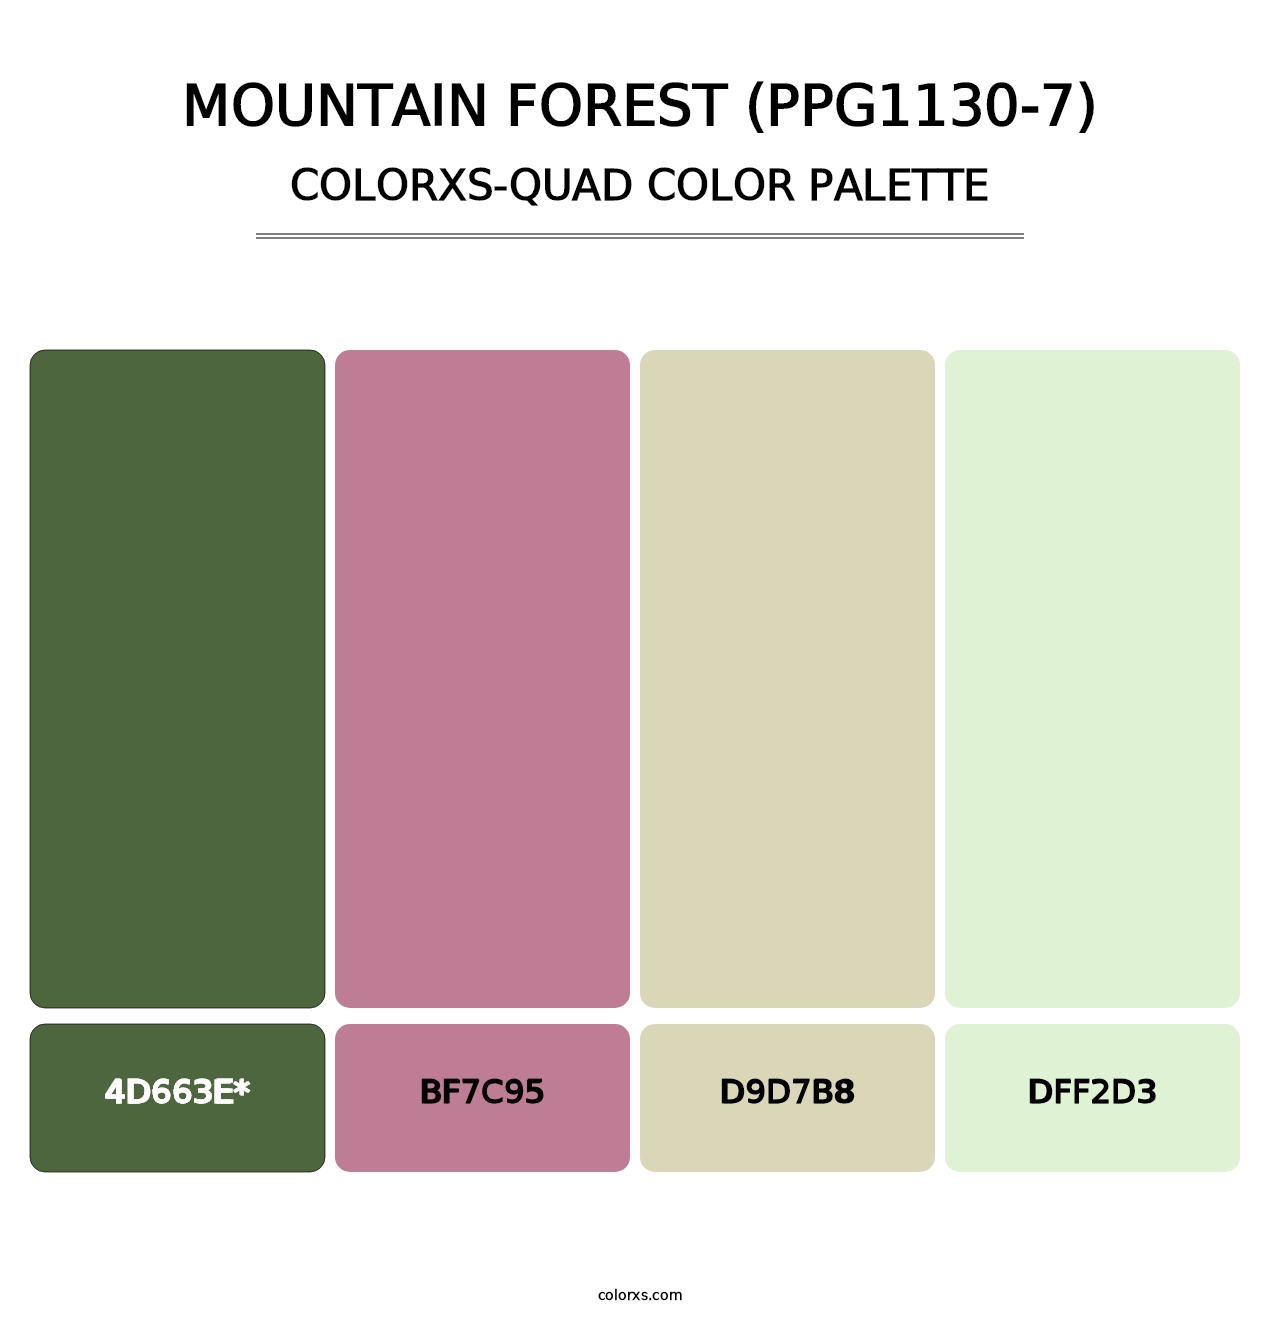 Mountain Forest (PPG1130-7) - Colorxs Quad Palette